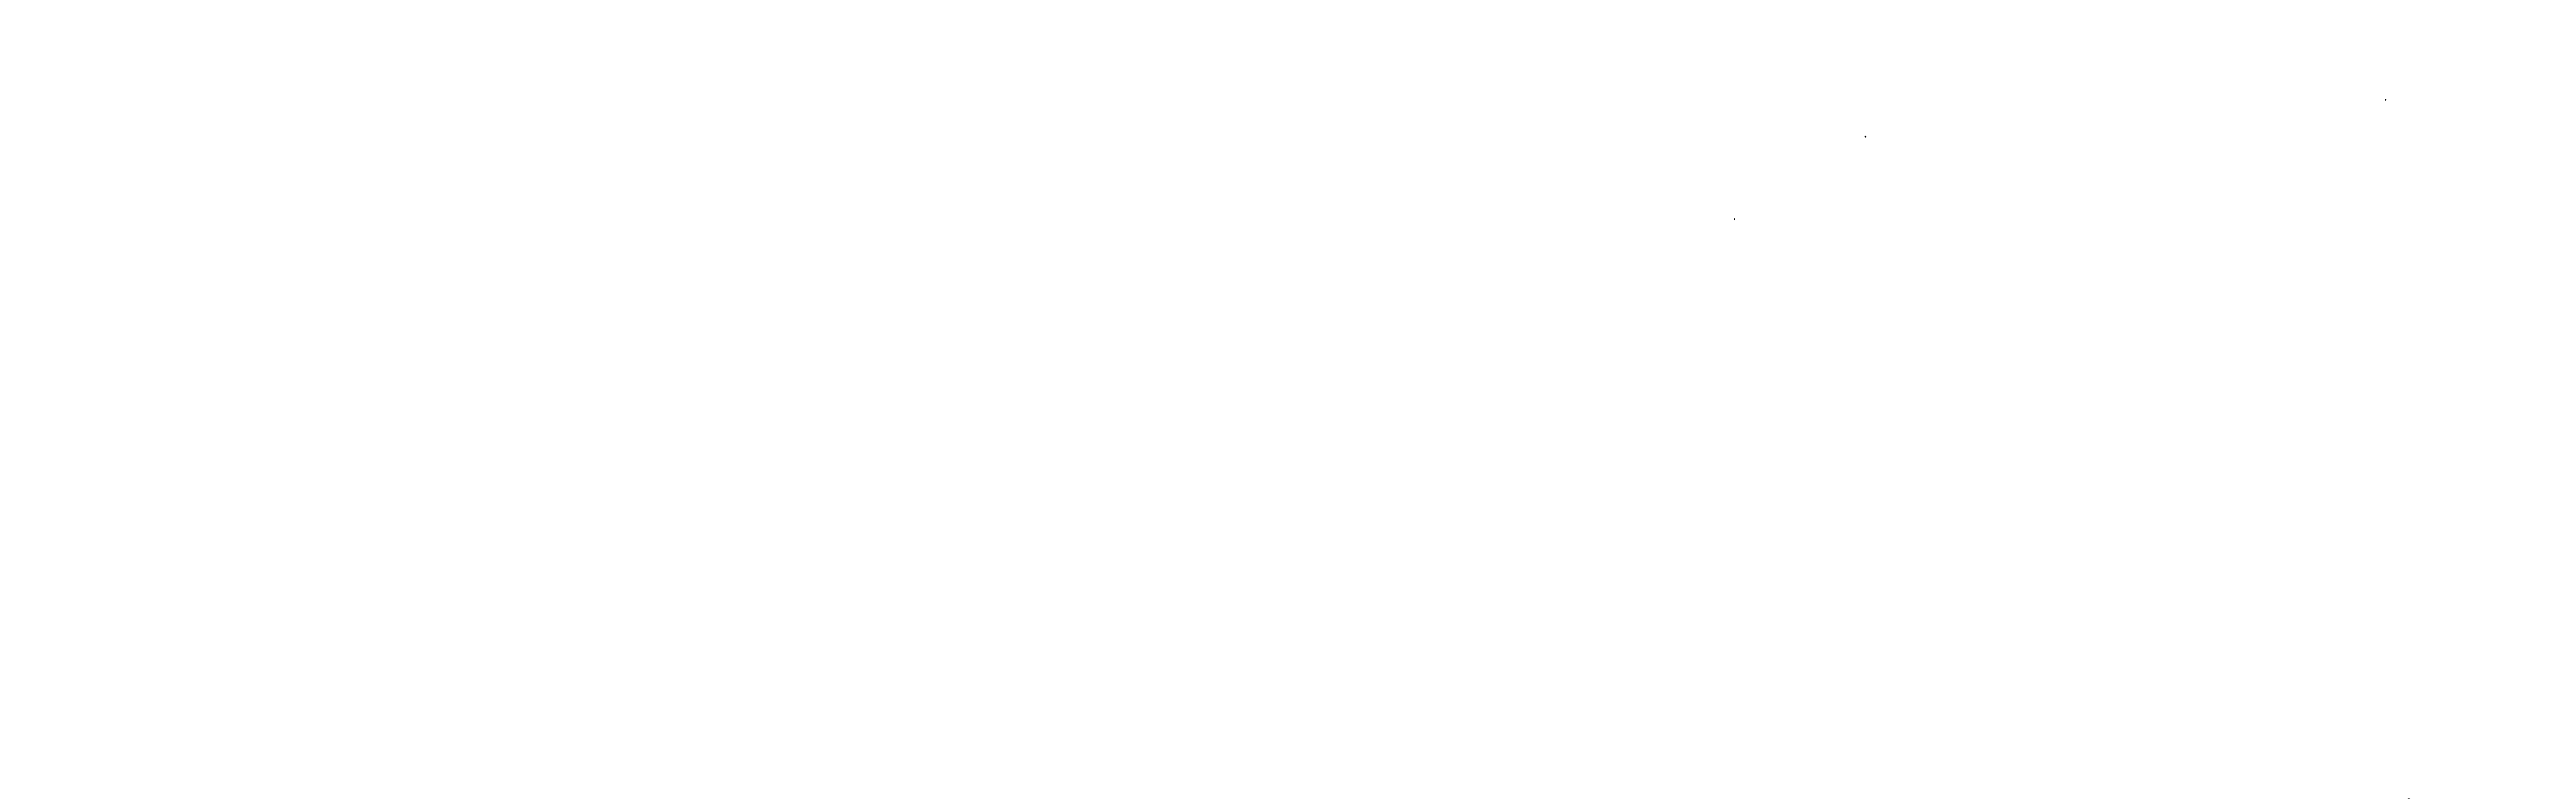 Fodder Farm logo 2 V2-02